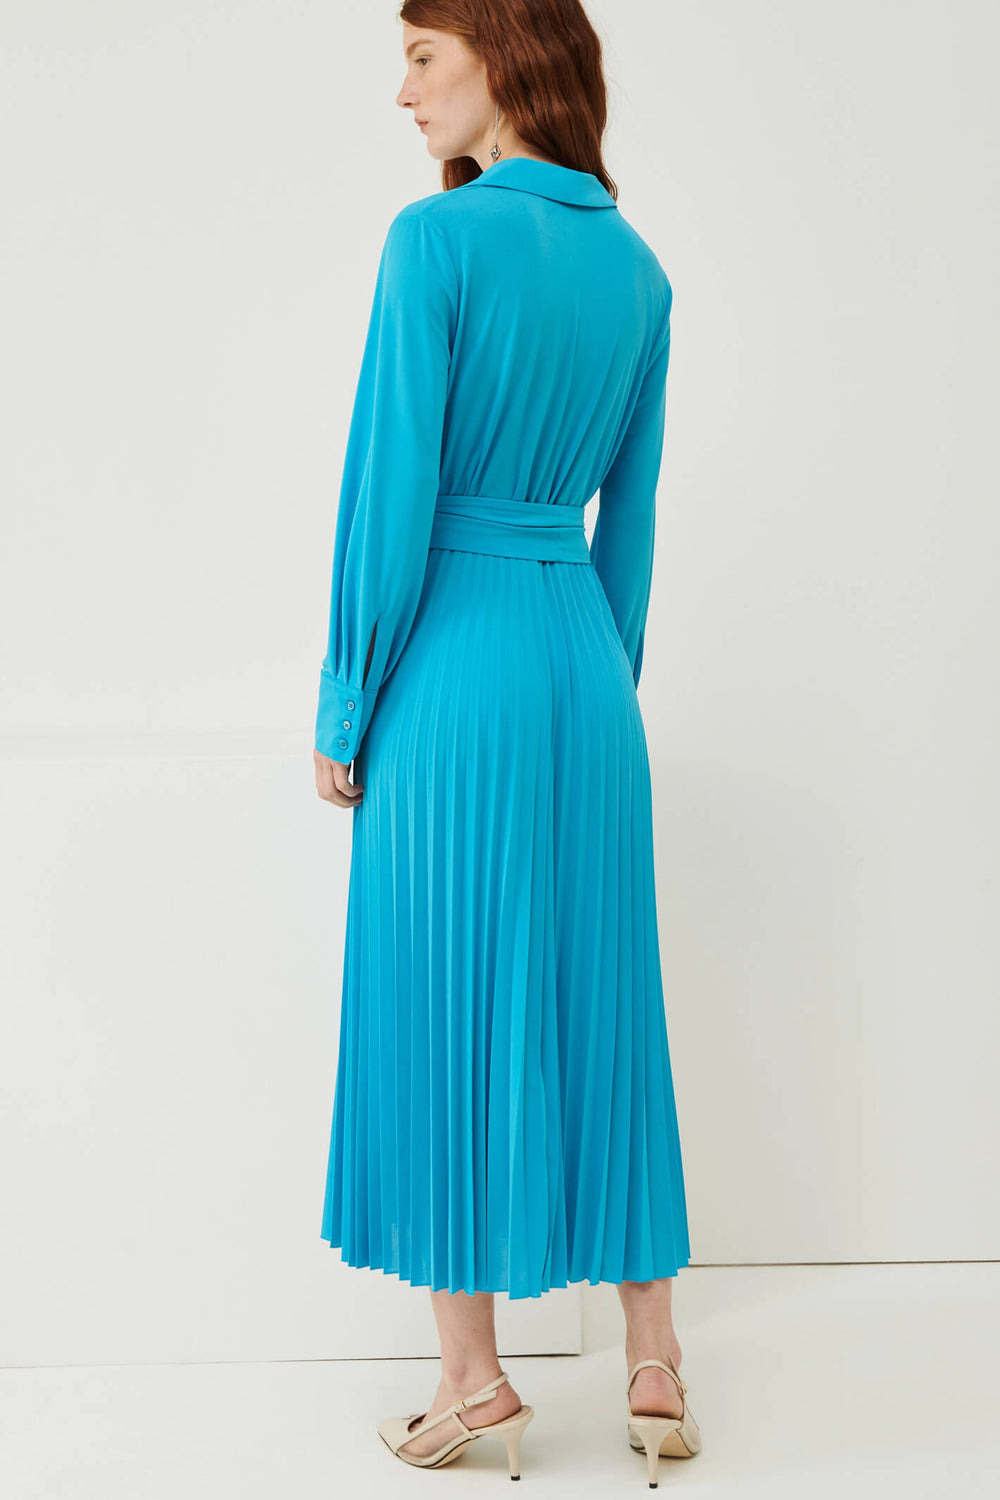 Marella Egadi 2336210231200 Turquoise Jersey Pleated Dress - Olivia Grace Fashion